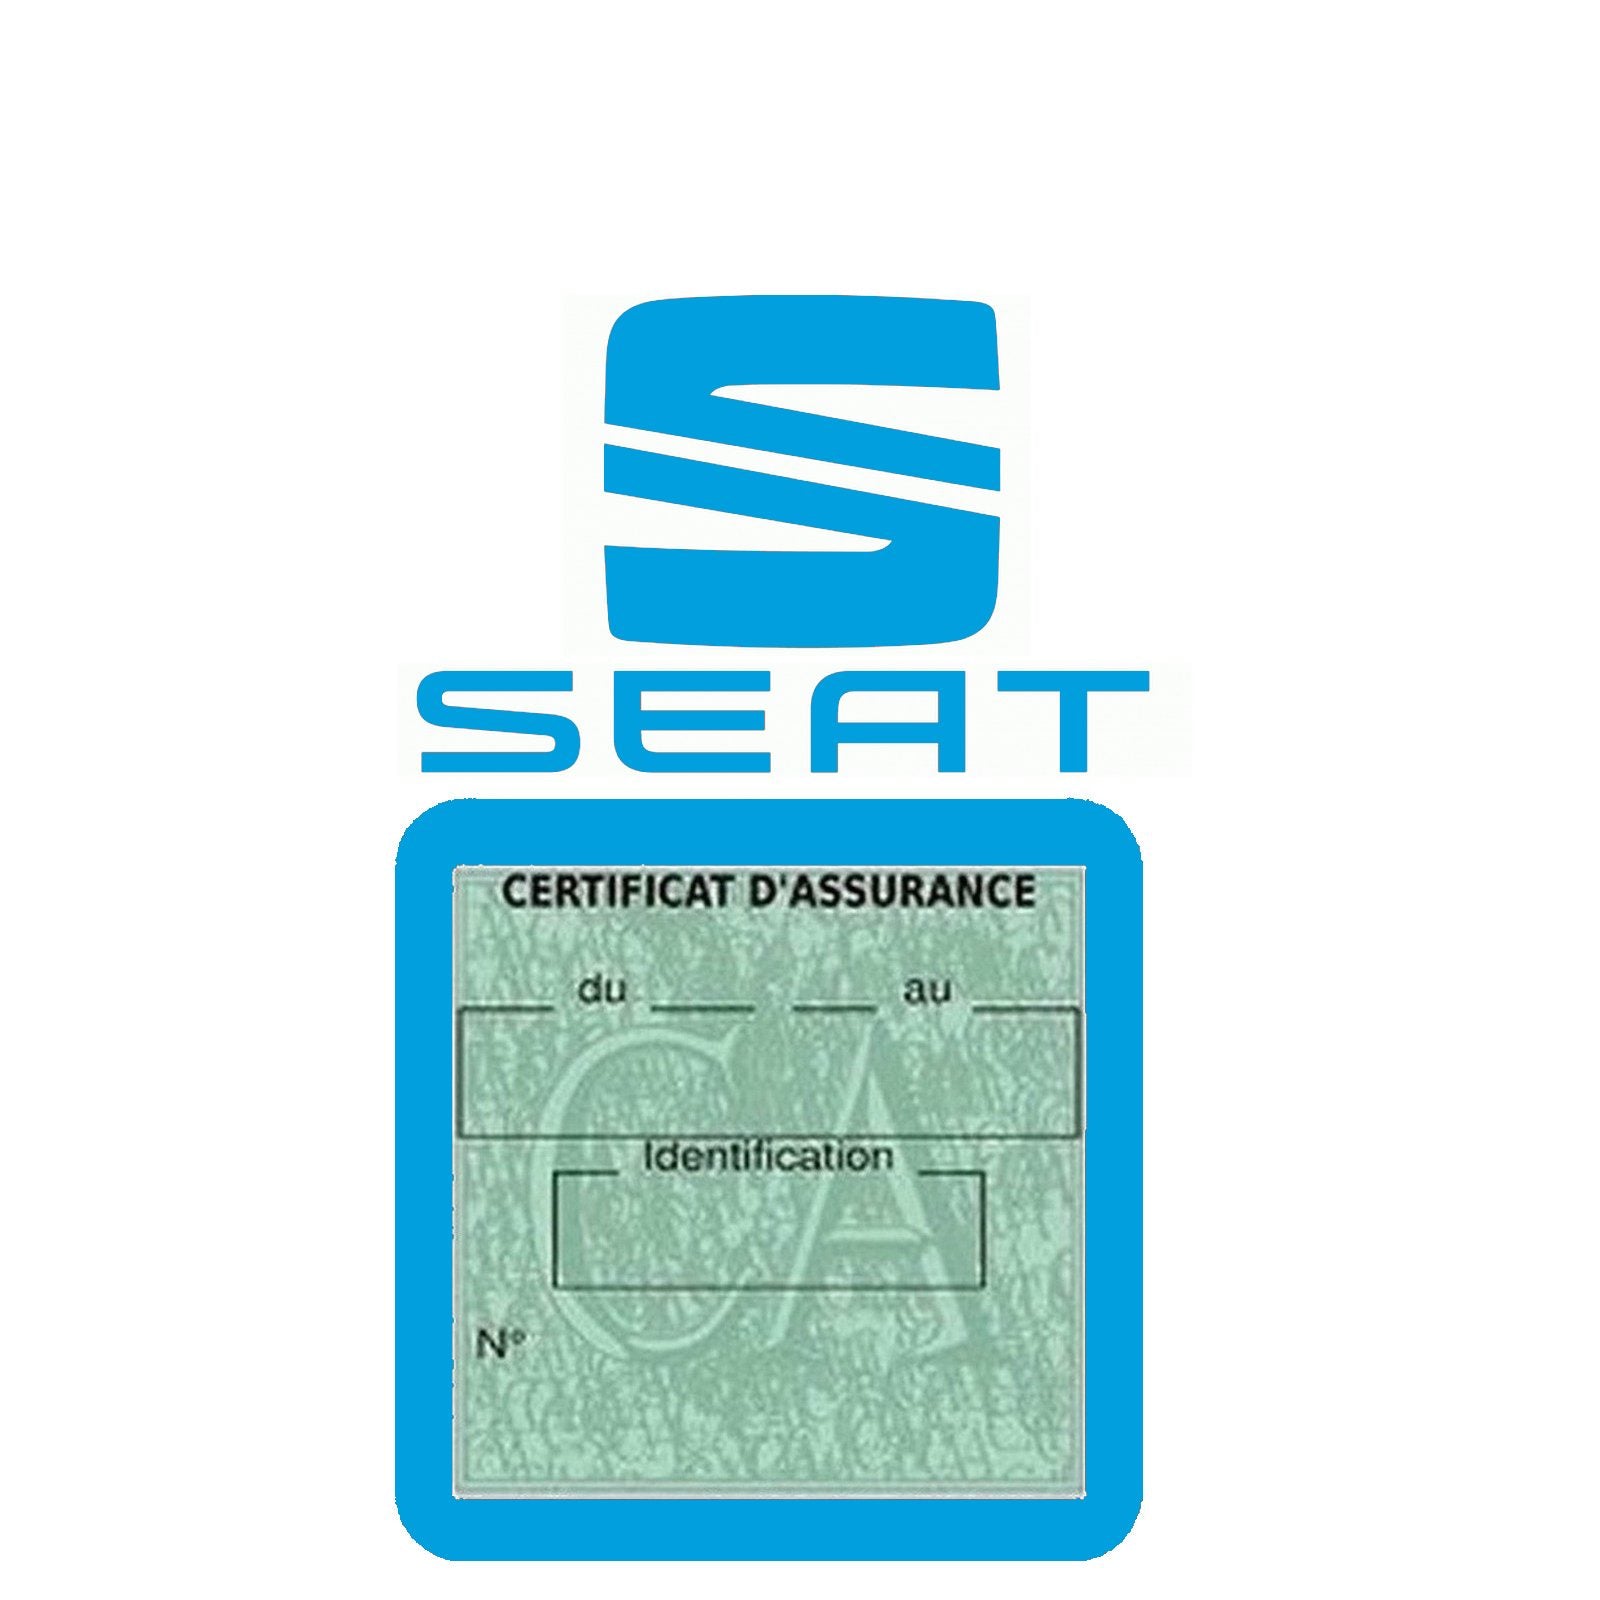 SEAT VS124 Etui assurance auto clicktofournisseur.com